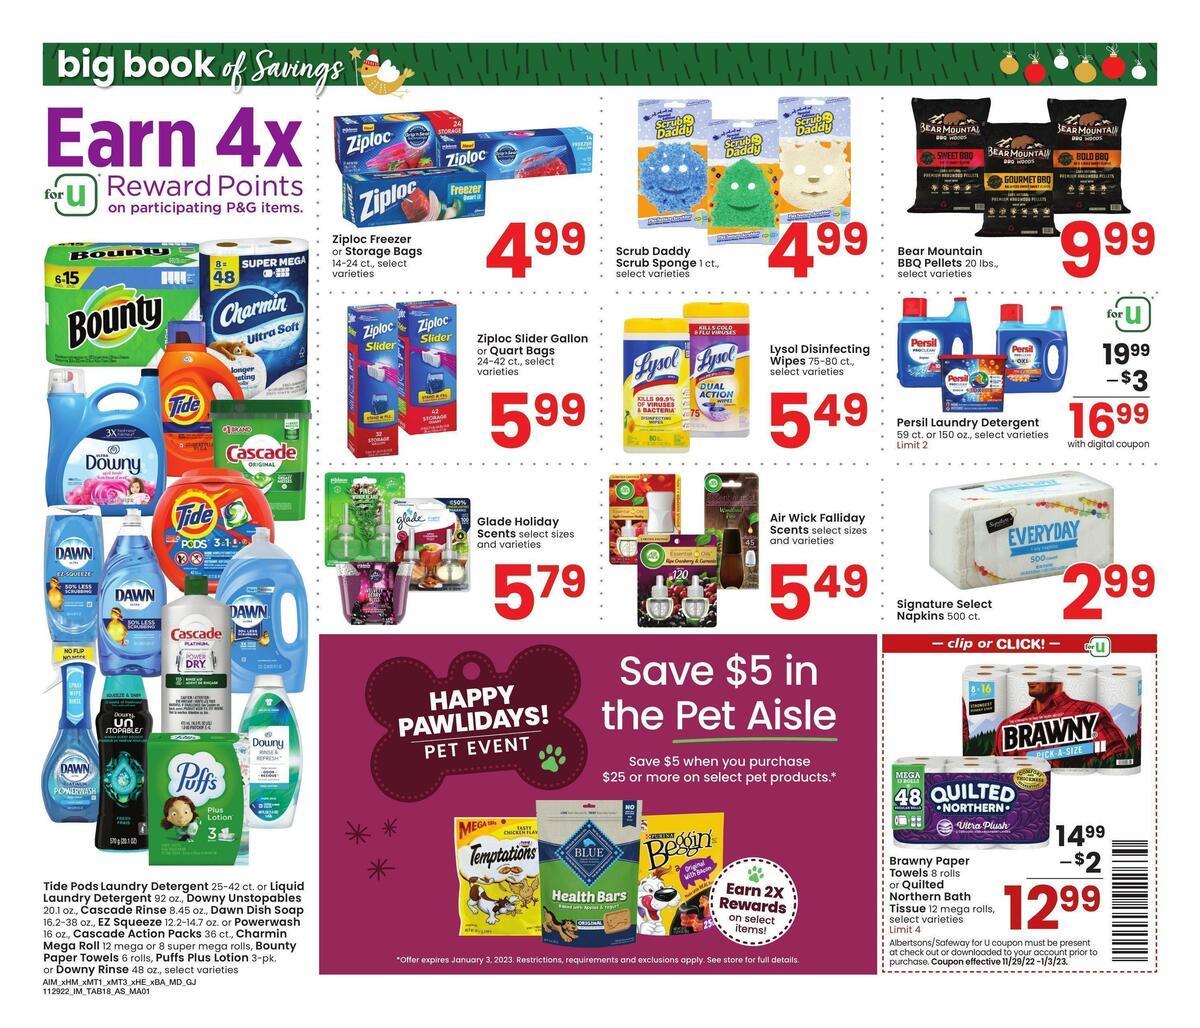 Albertsons Big Book of Savings Weekly Ad from November 29